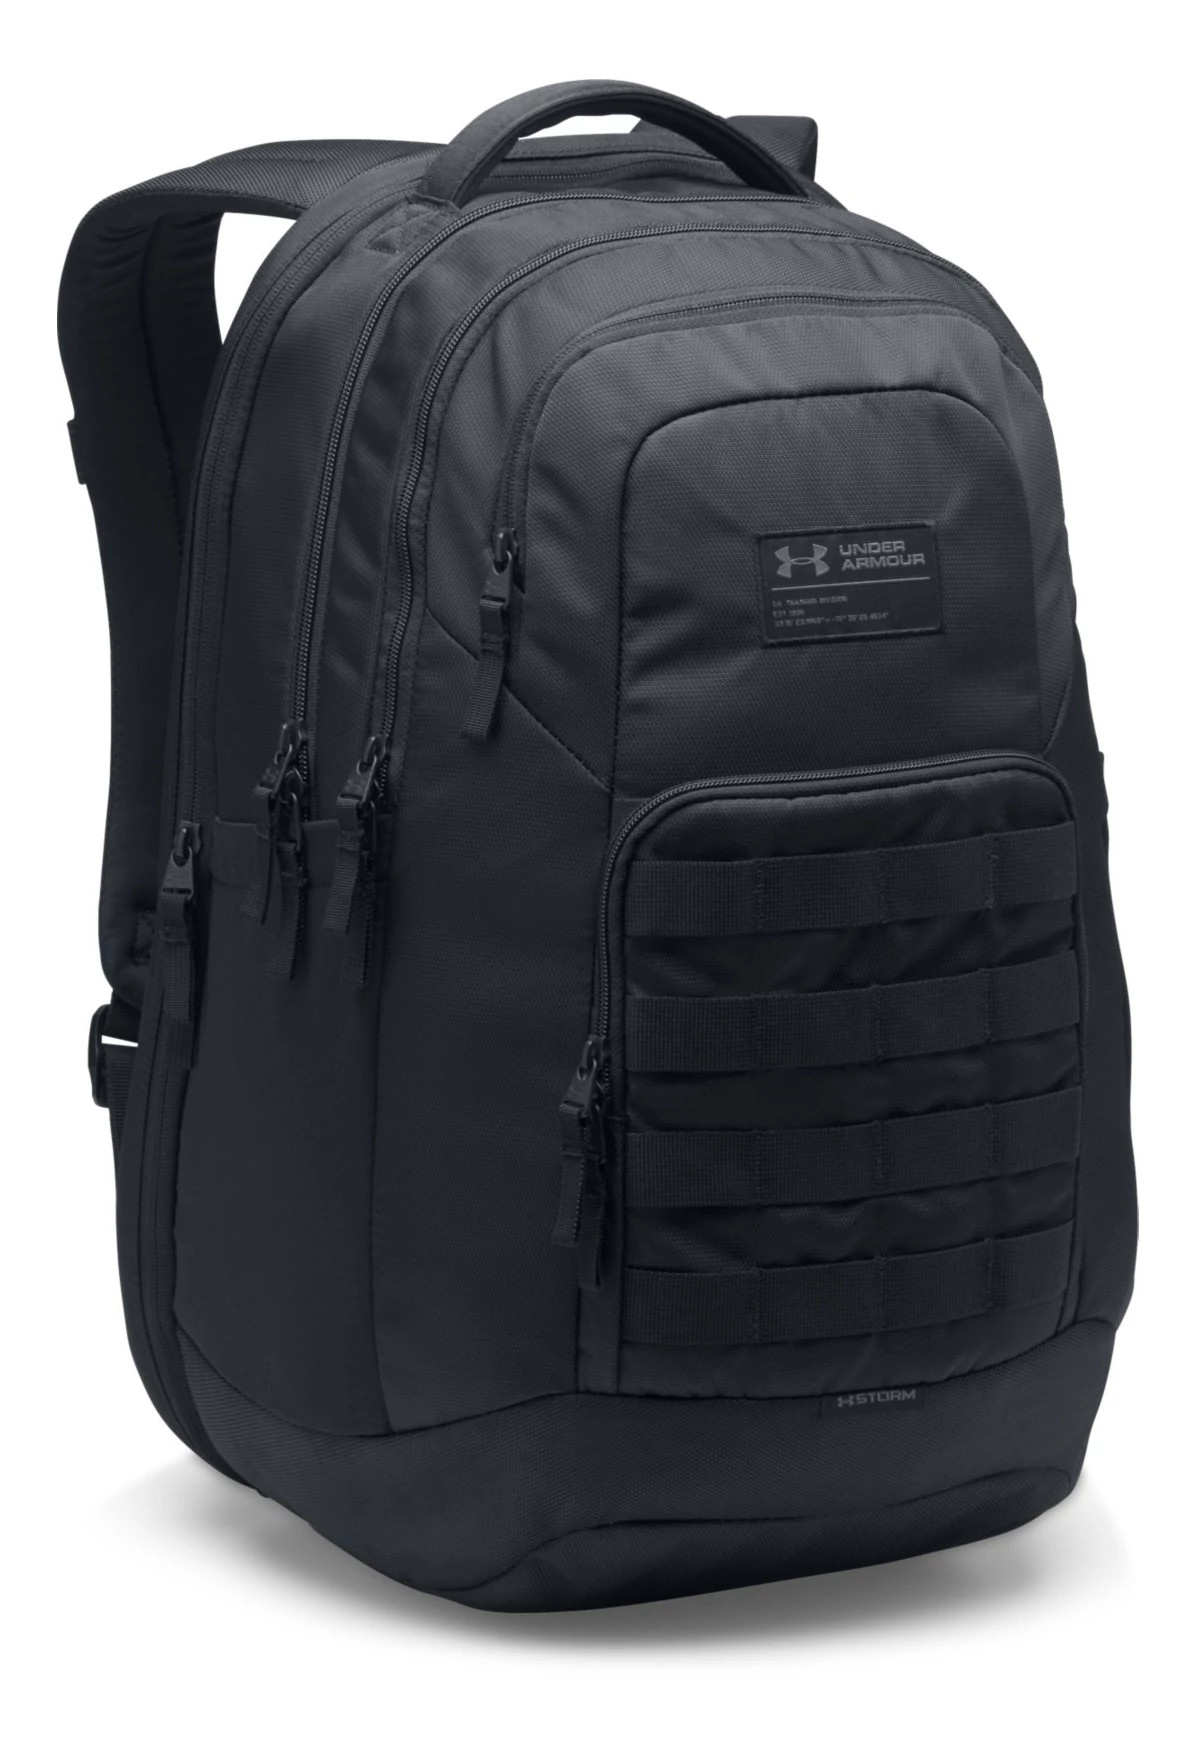 Under Armour Guardian Backpack Black/graphite 1295553-040 - Best Buy